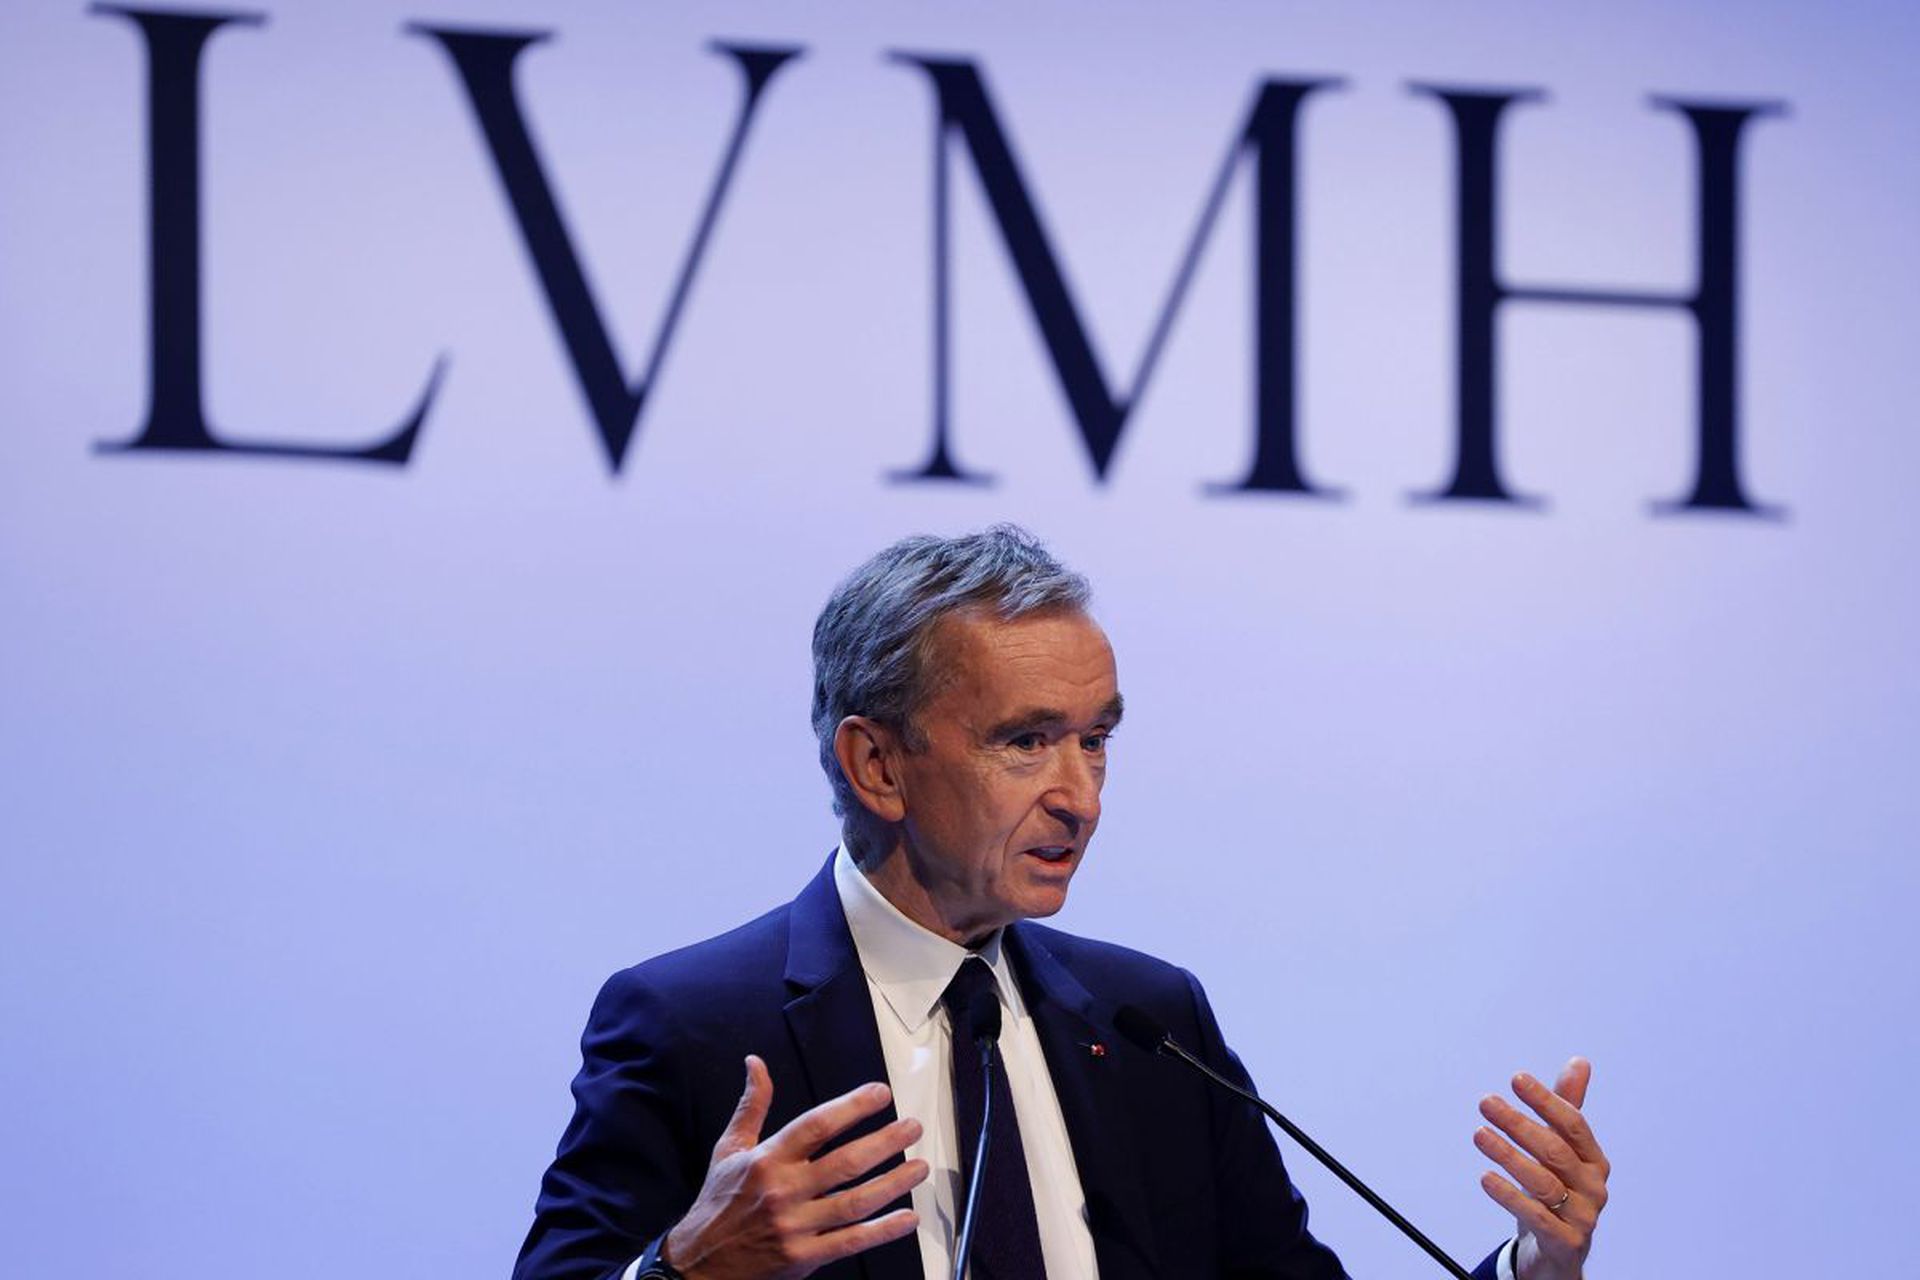 LVMH集團主席Arnault發出警告：「必須警惕元宇宙泡沫」